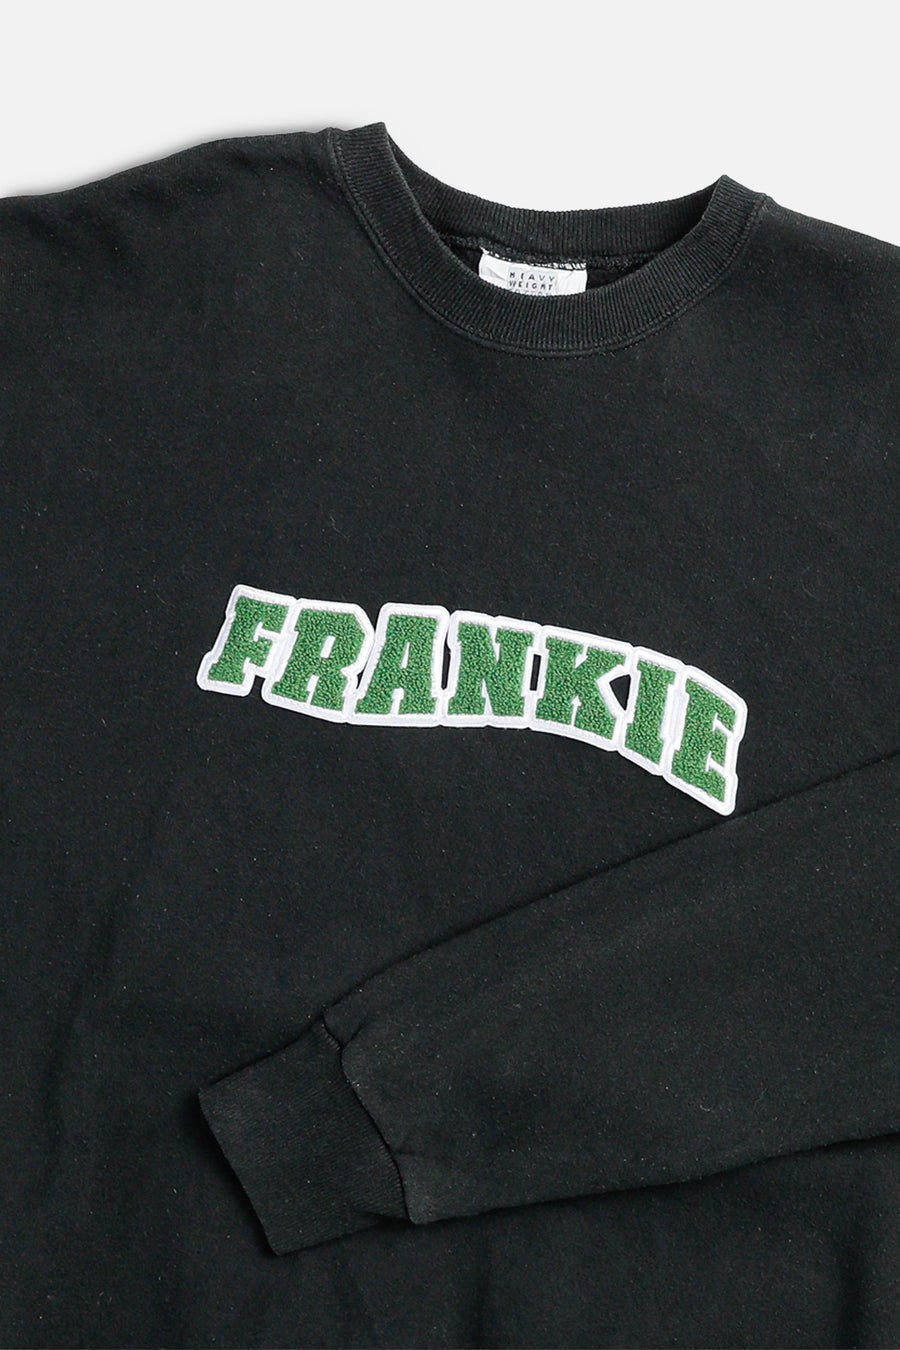 Frankie Upcycled Varsity Sweatshirt - XS, S, M, L, XL, XXL